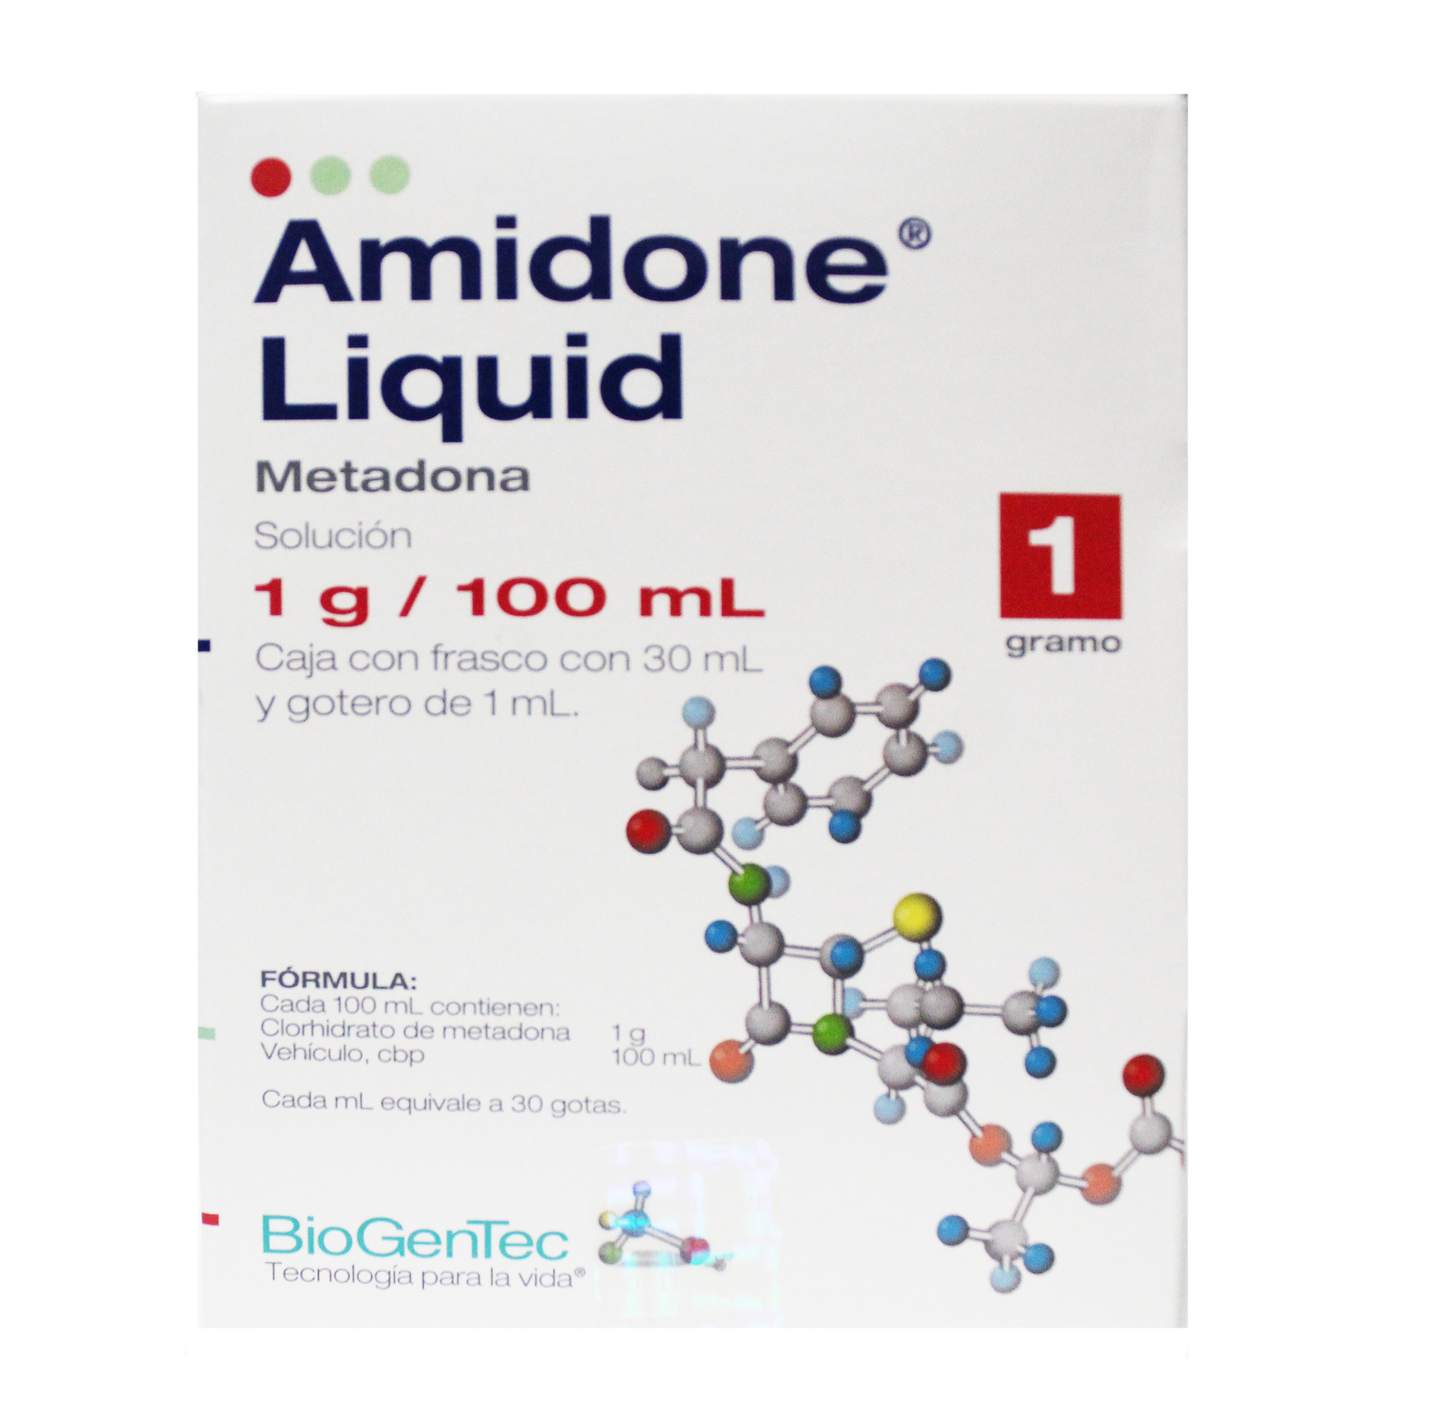 Amidone Liquid